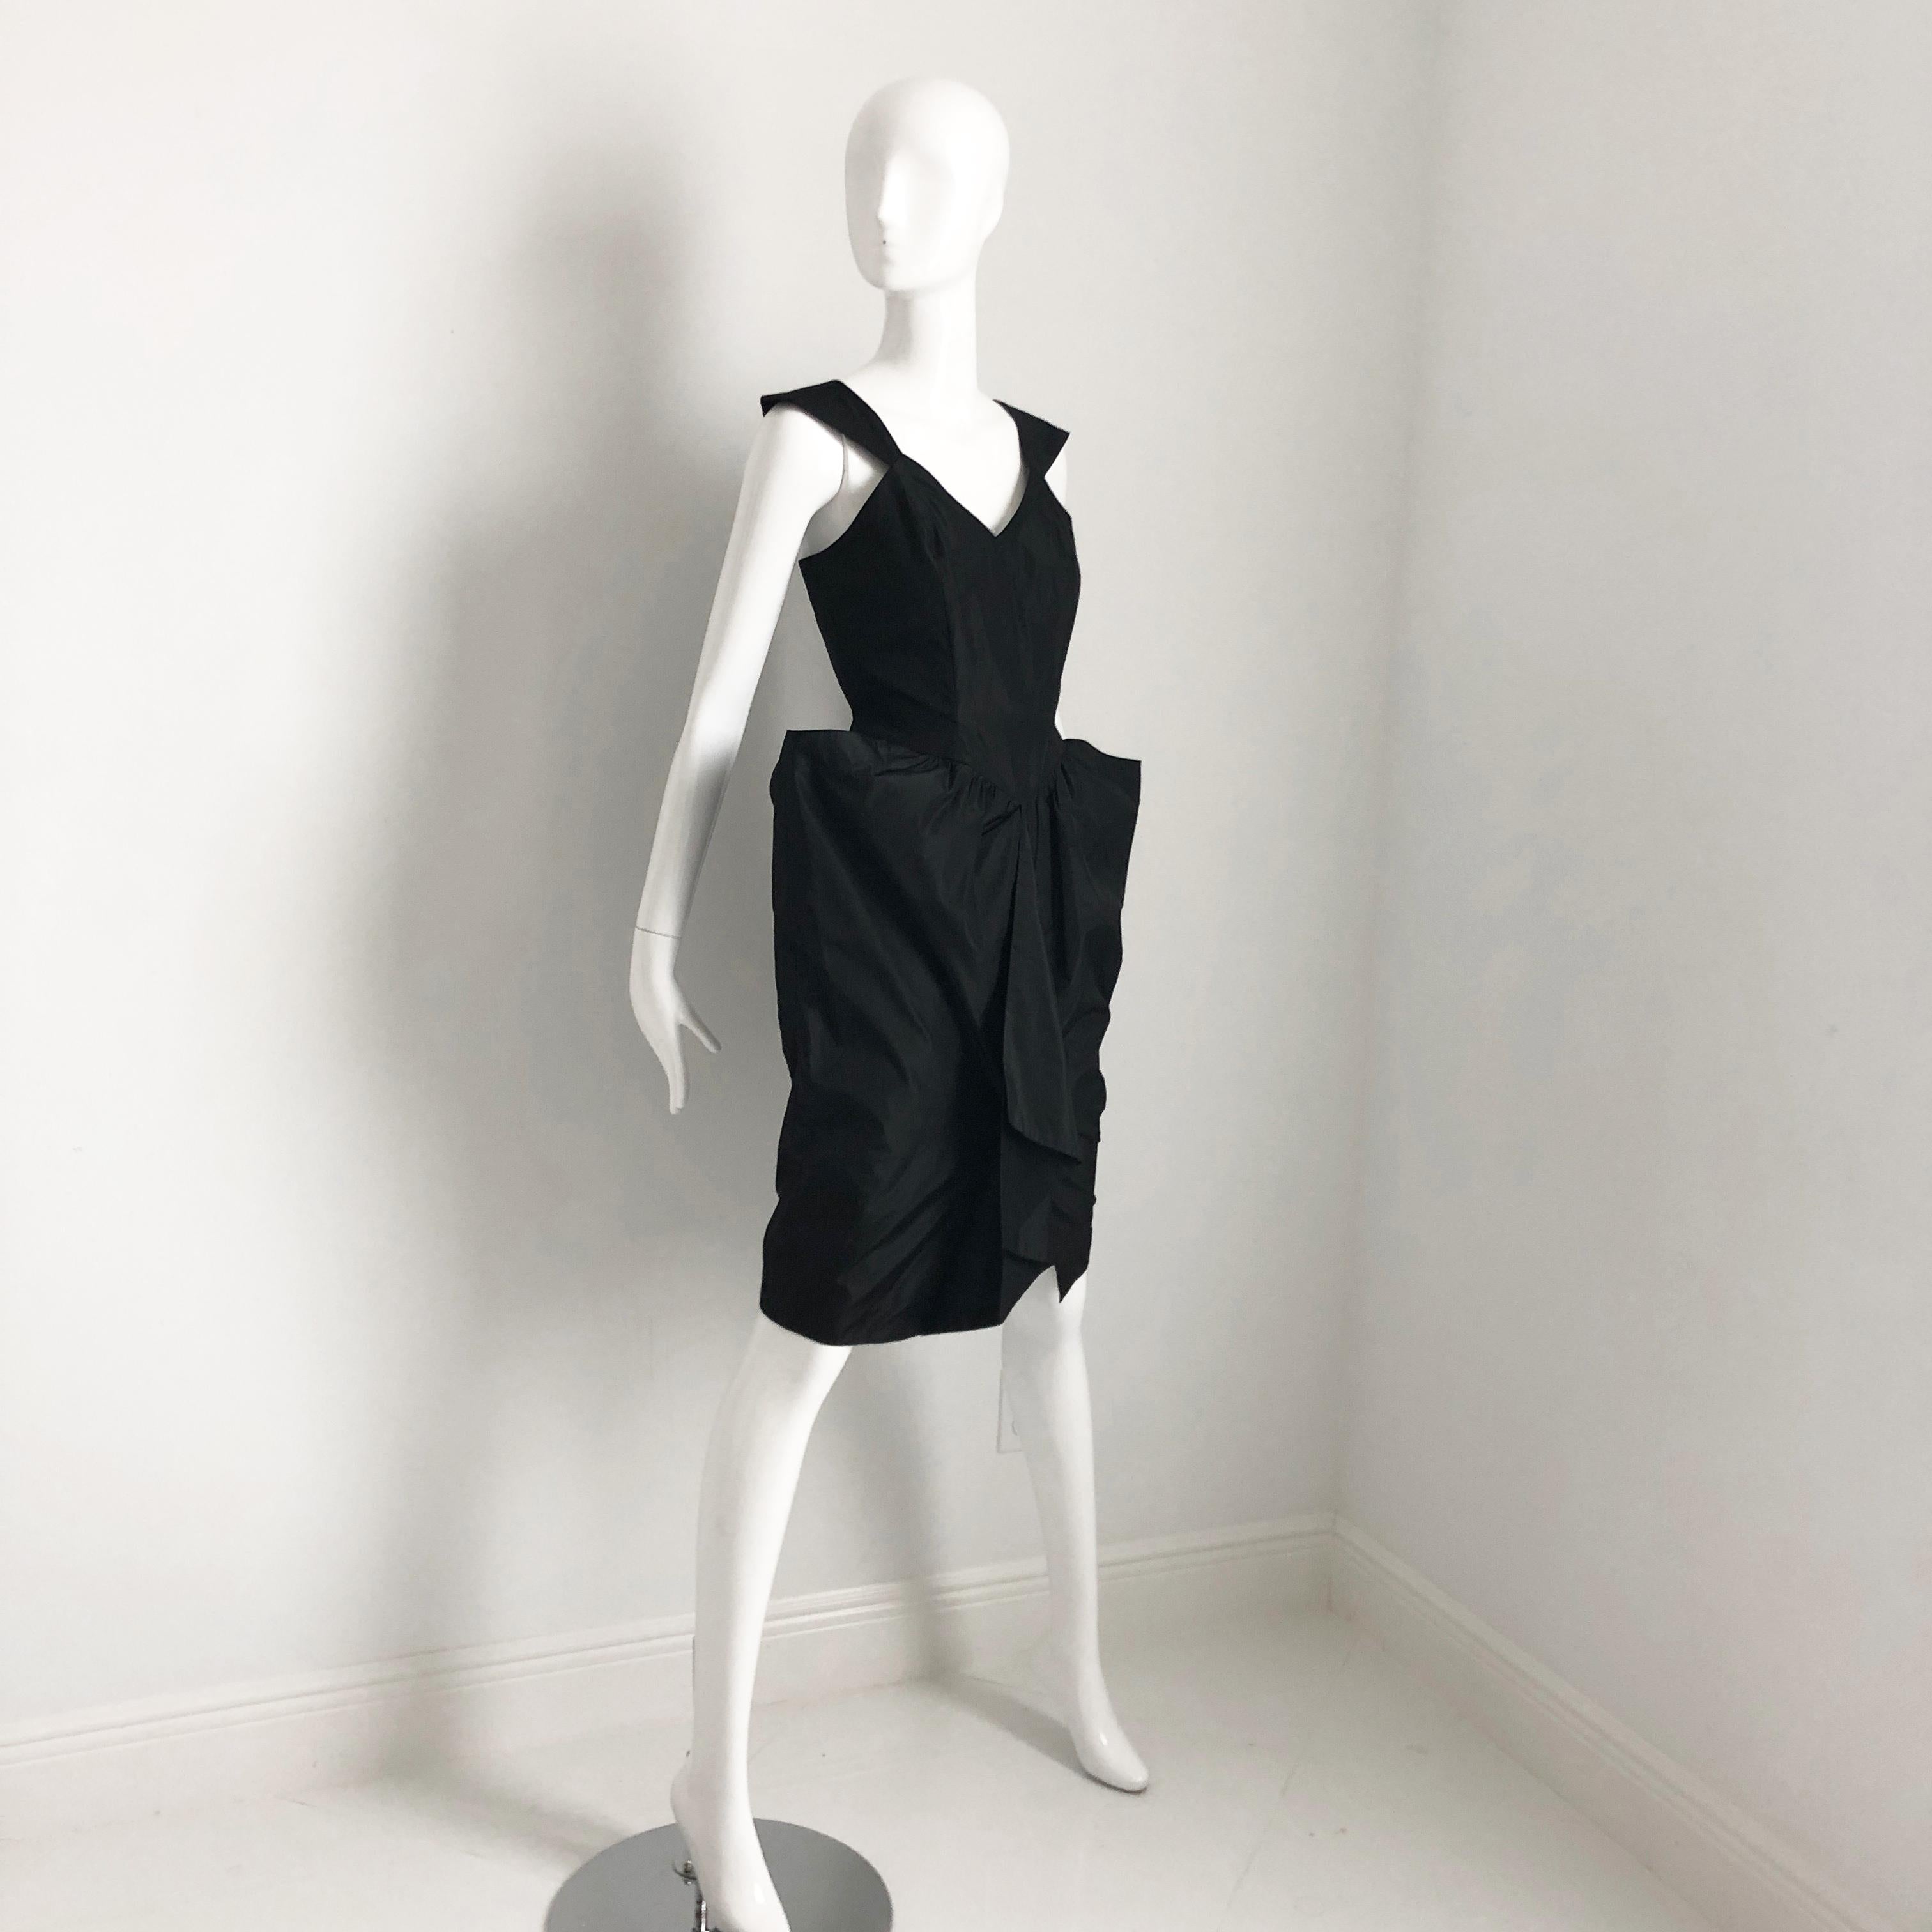 Thierry Mugler Black Taffeta Cocktail Dress Sculptural Silhouette Vintage Sz 9  5